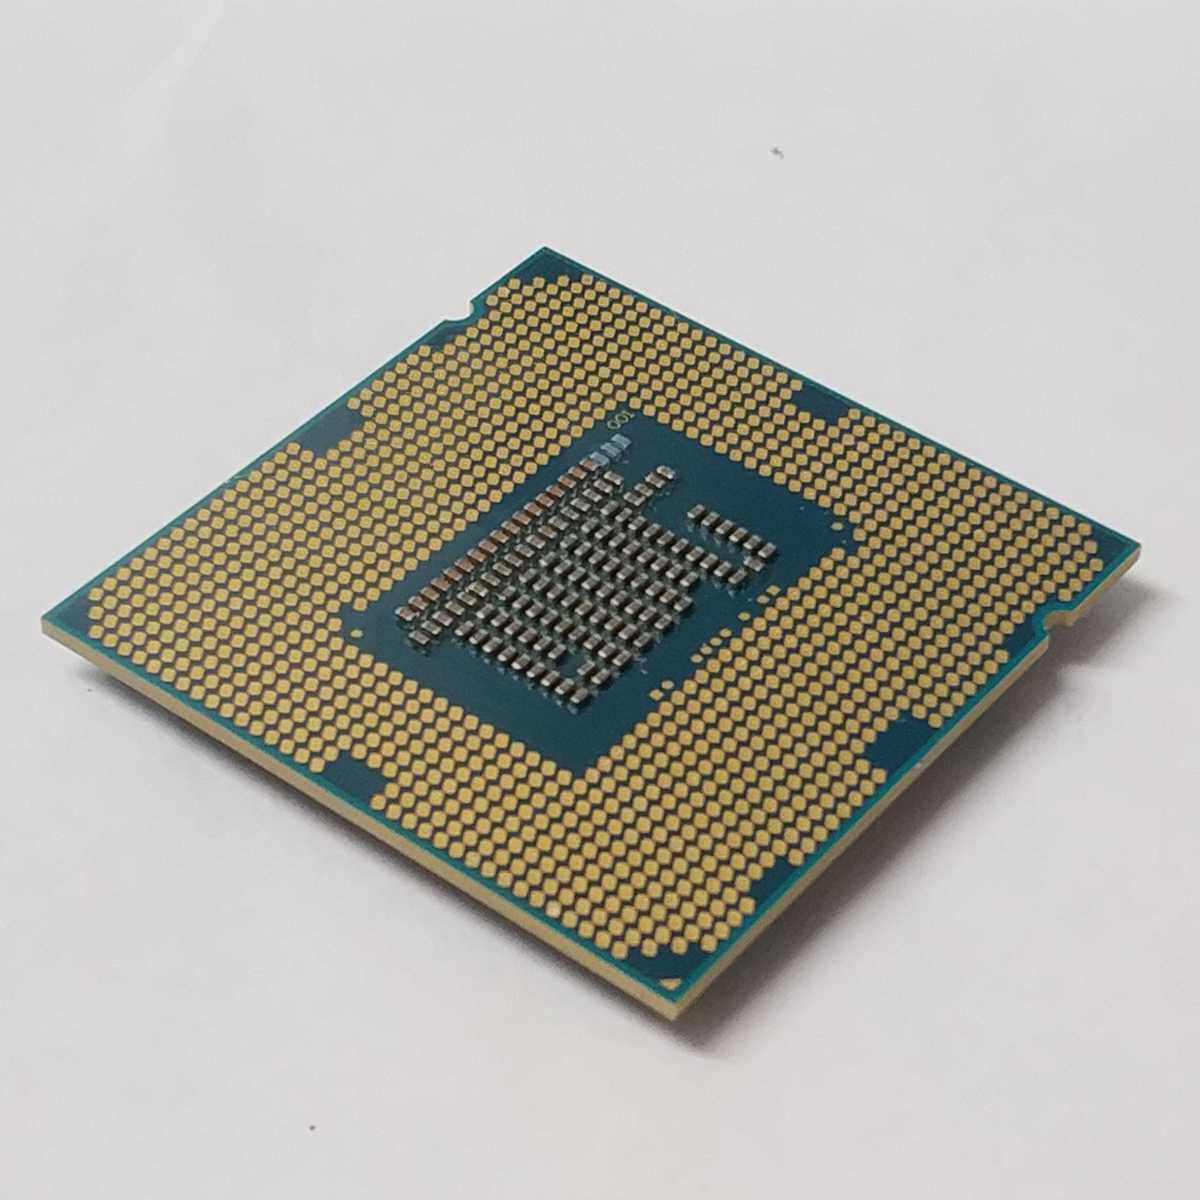 dok grillen Giet ヤフオク! - 即日発送 送料198円 CPU Intel Core i3-3220 3.3...